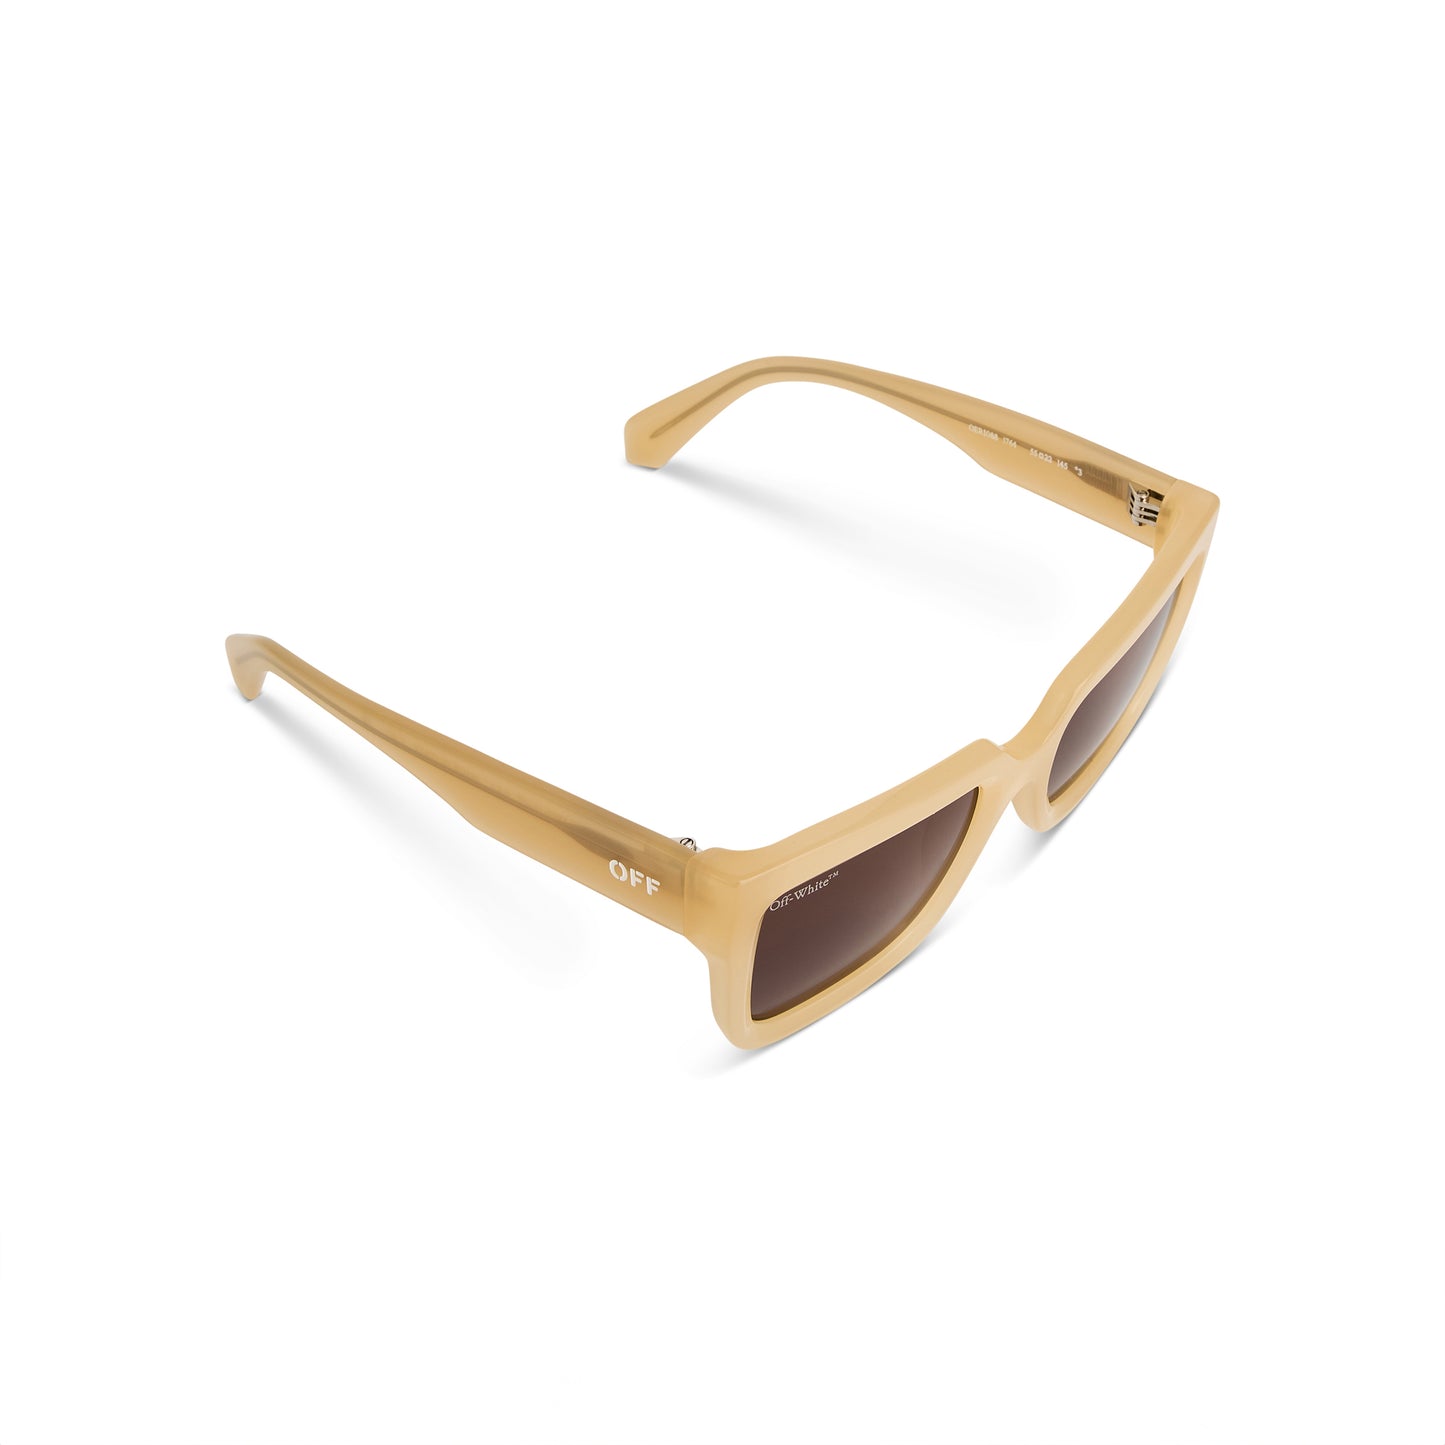 Firenze Sunglasses in Sand Brown